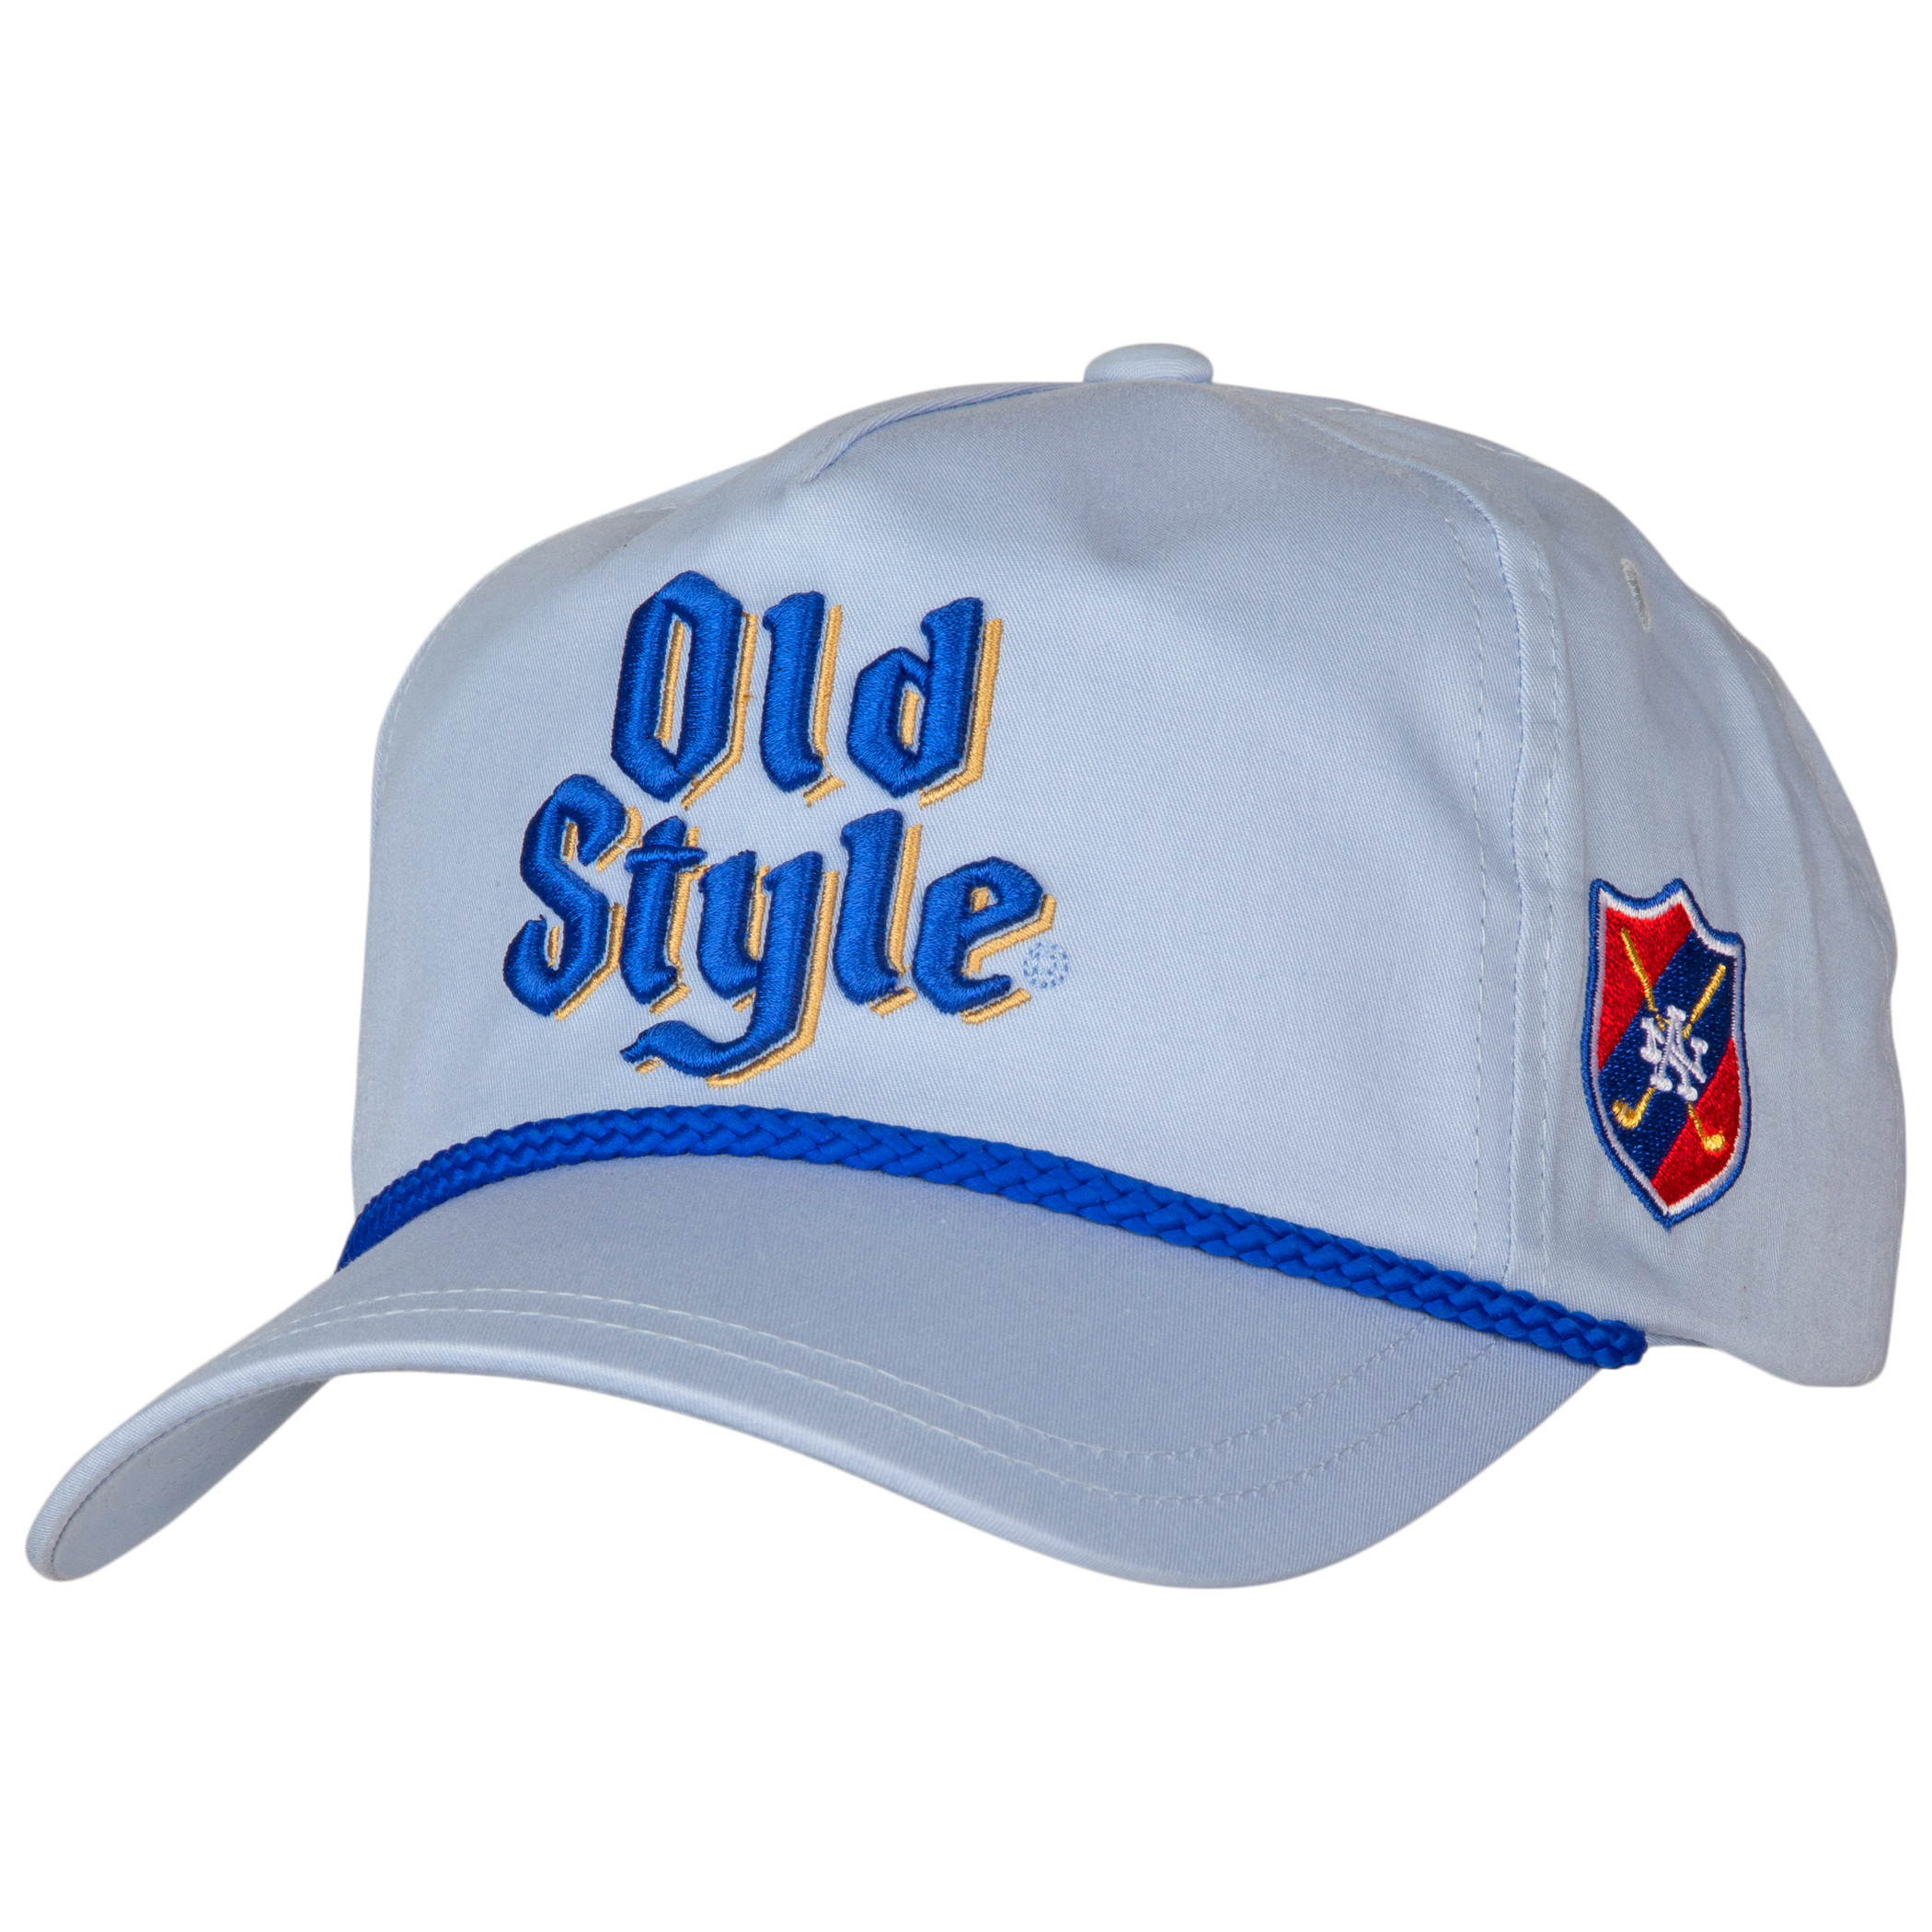 Old Style Roped Brim Adjustable Snapback Hat